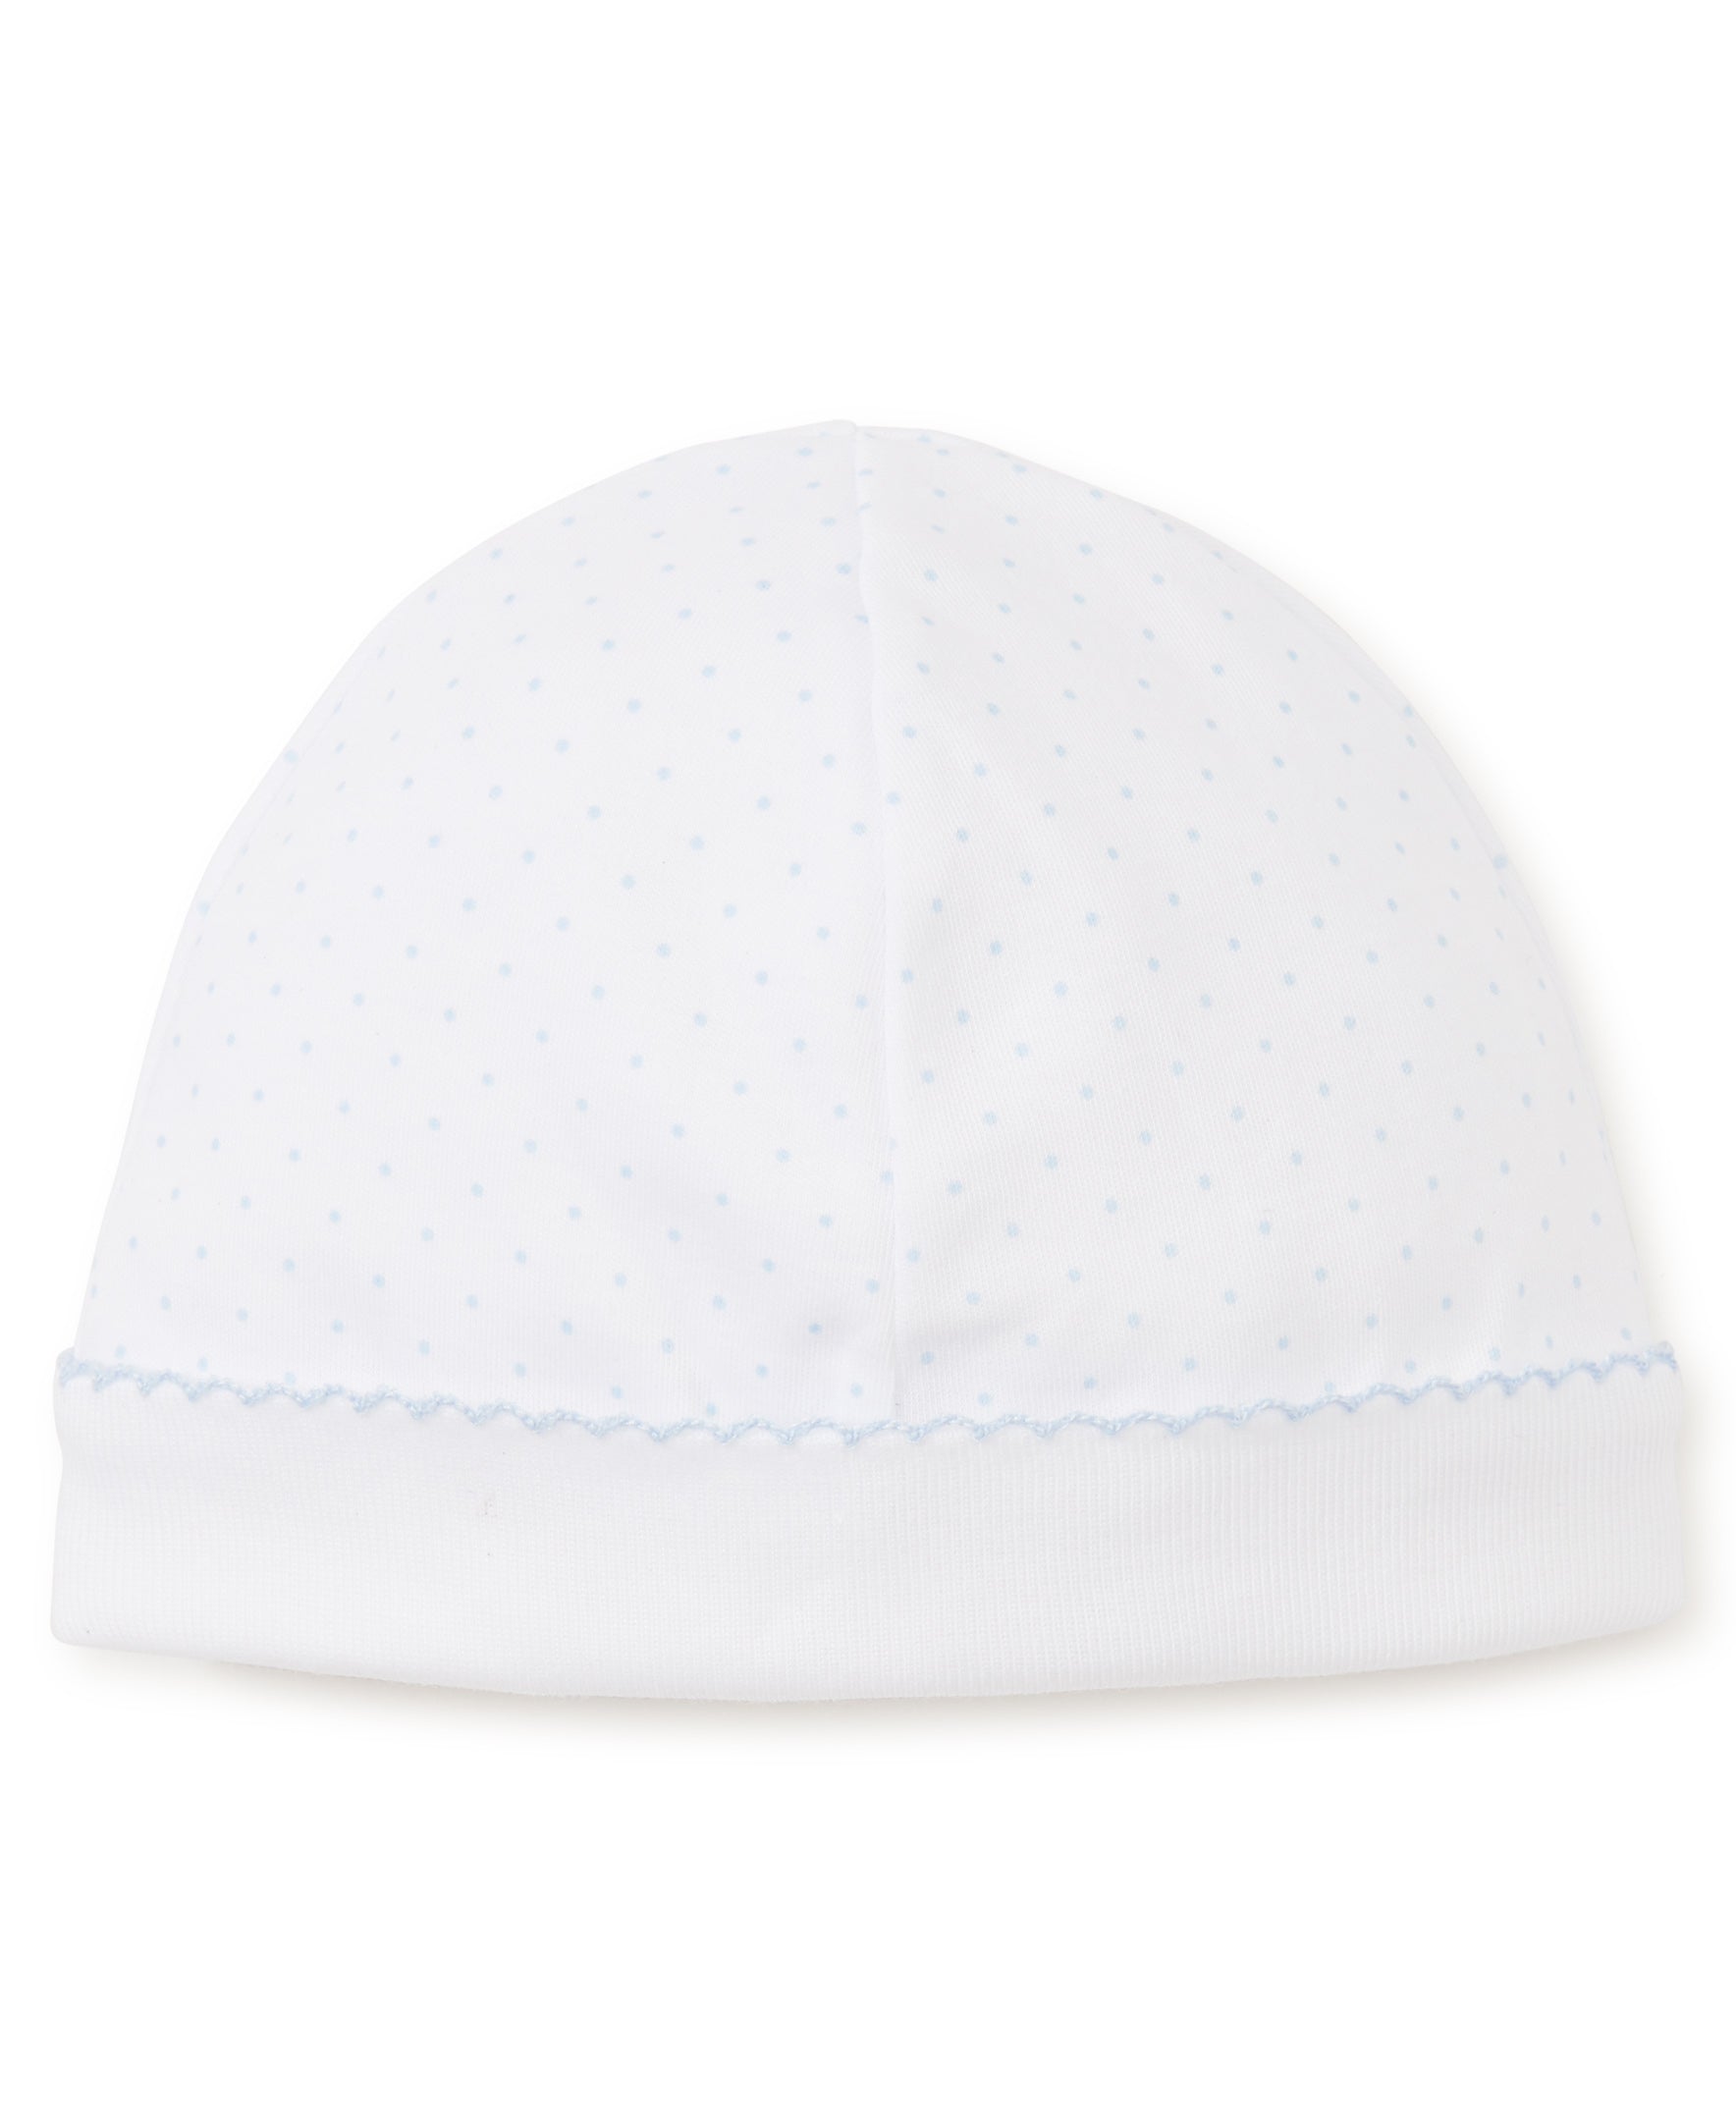 New Kissy Dots Hat, White/Blue